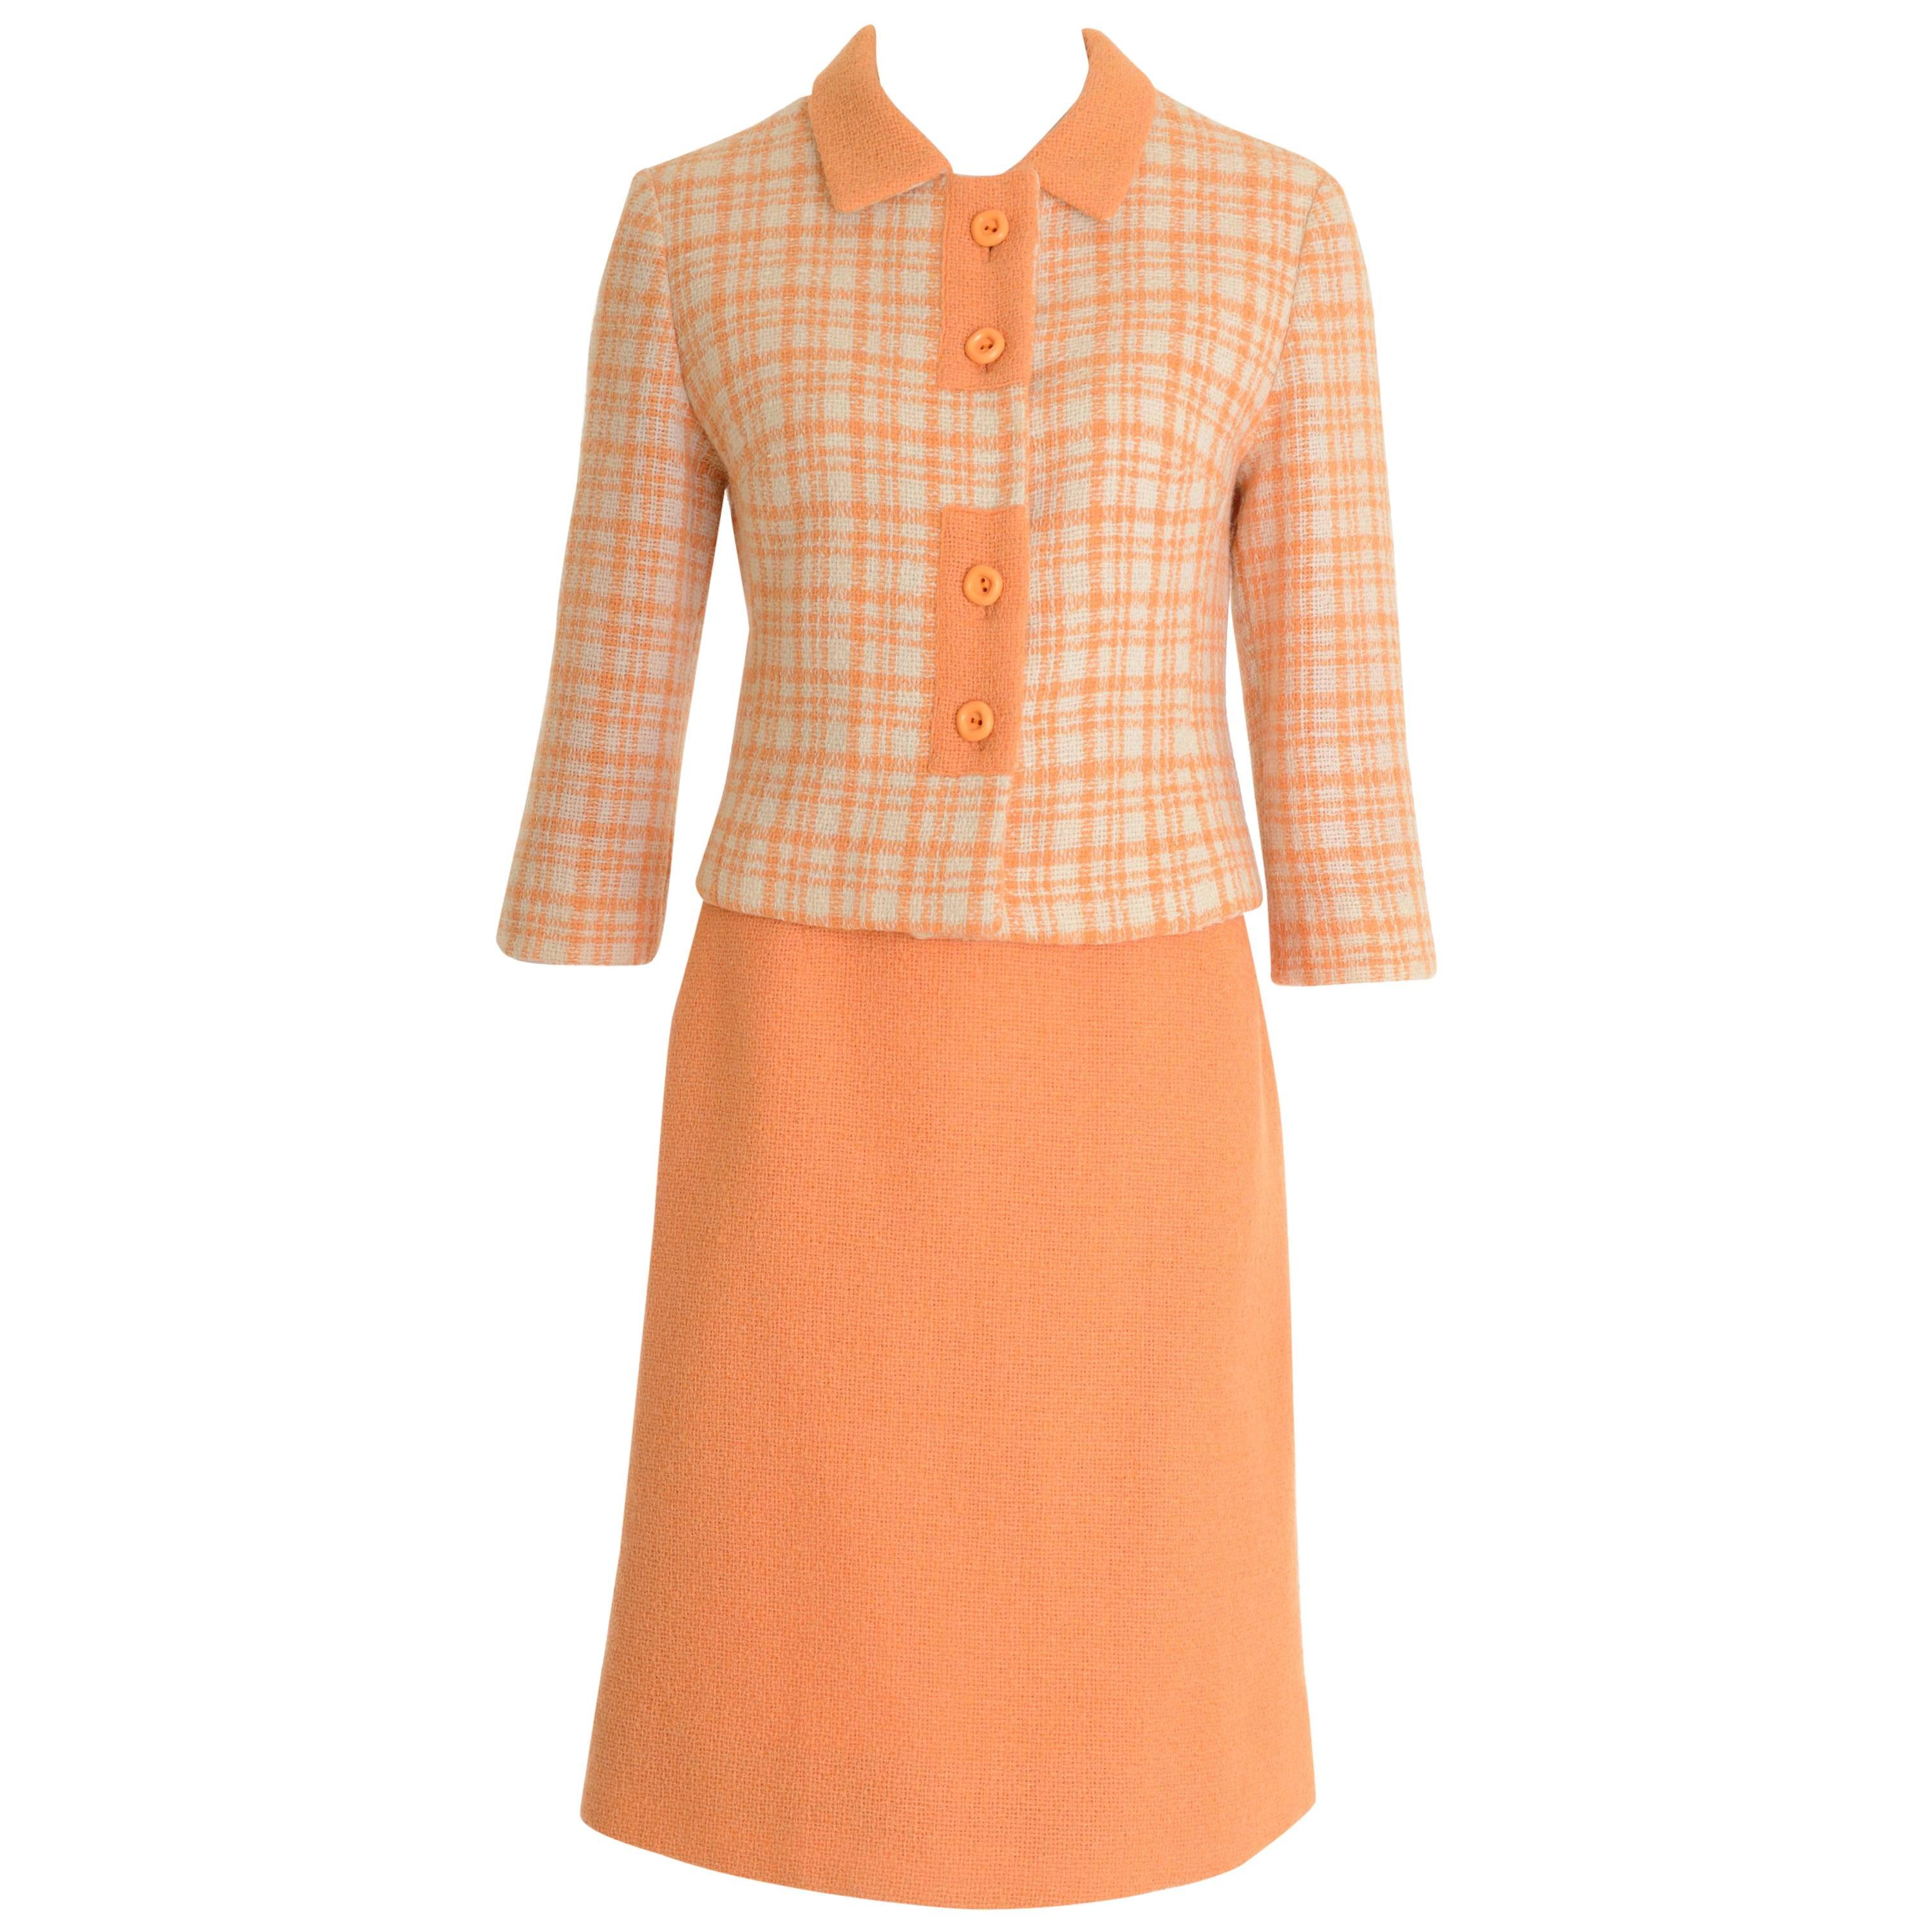 1960s SORELLE FONTANA Italian Couture Mod Suit Dress  For Sale